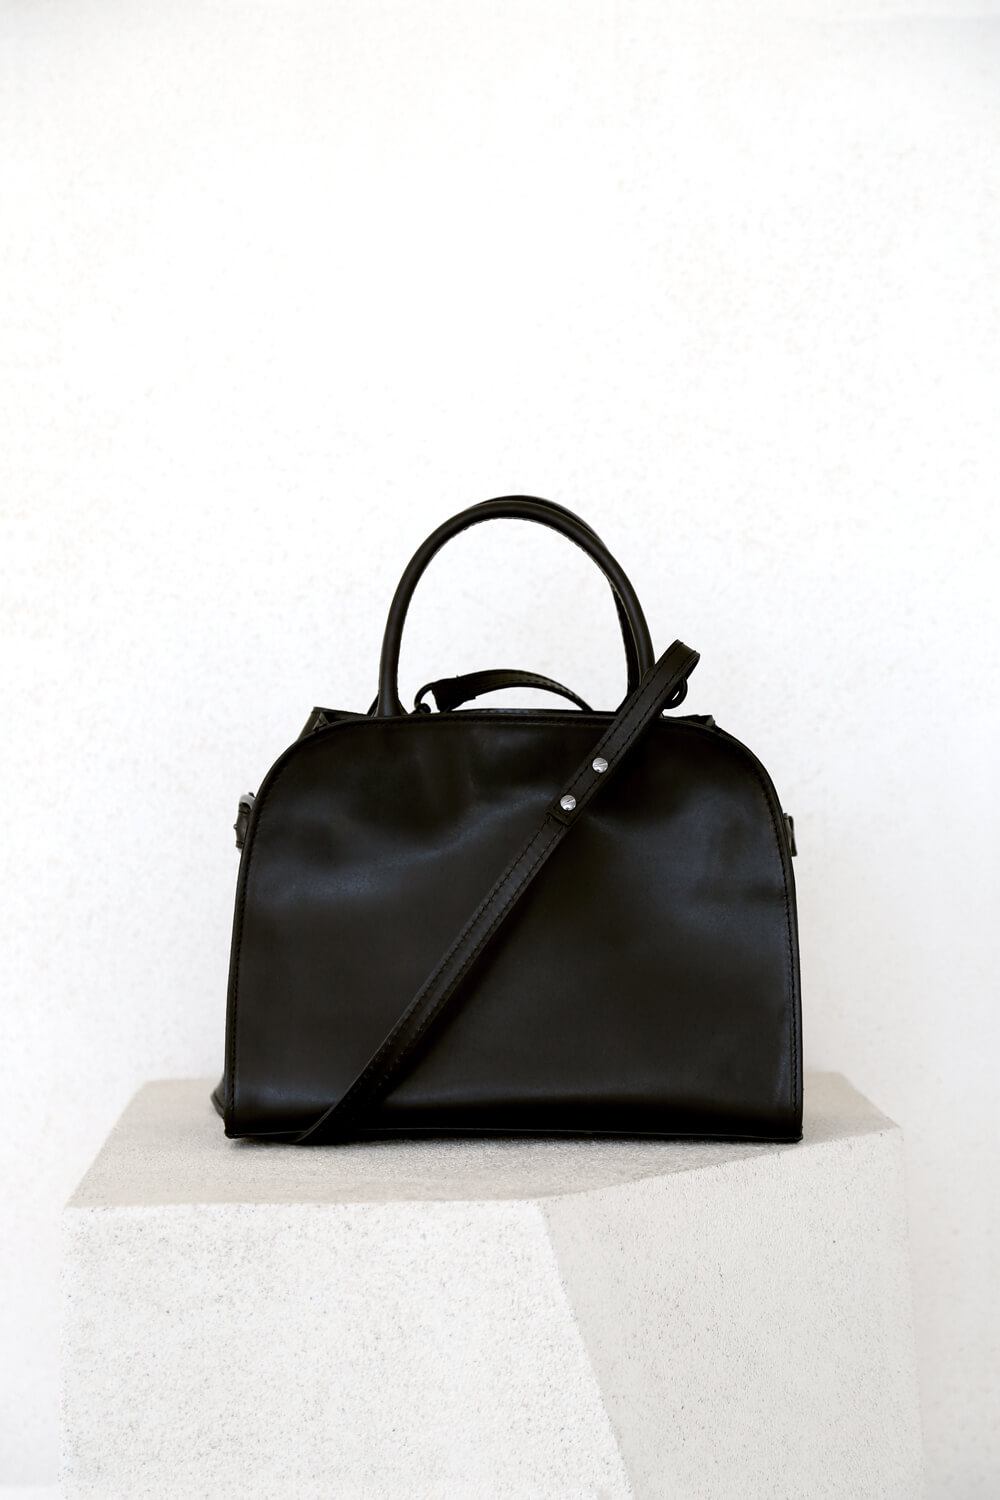 Sella S Polished Black - Corîu - Leather Bags